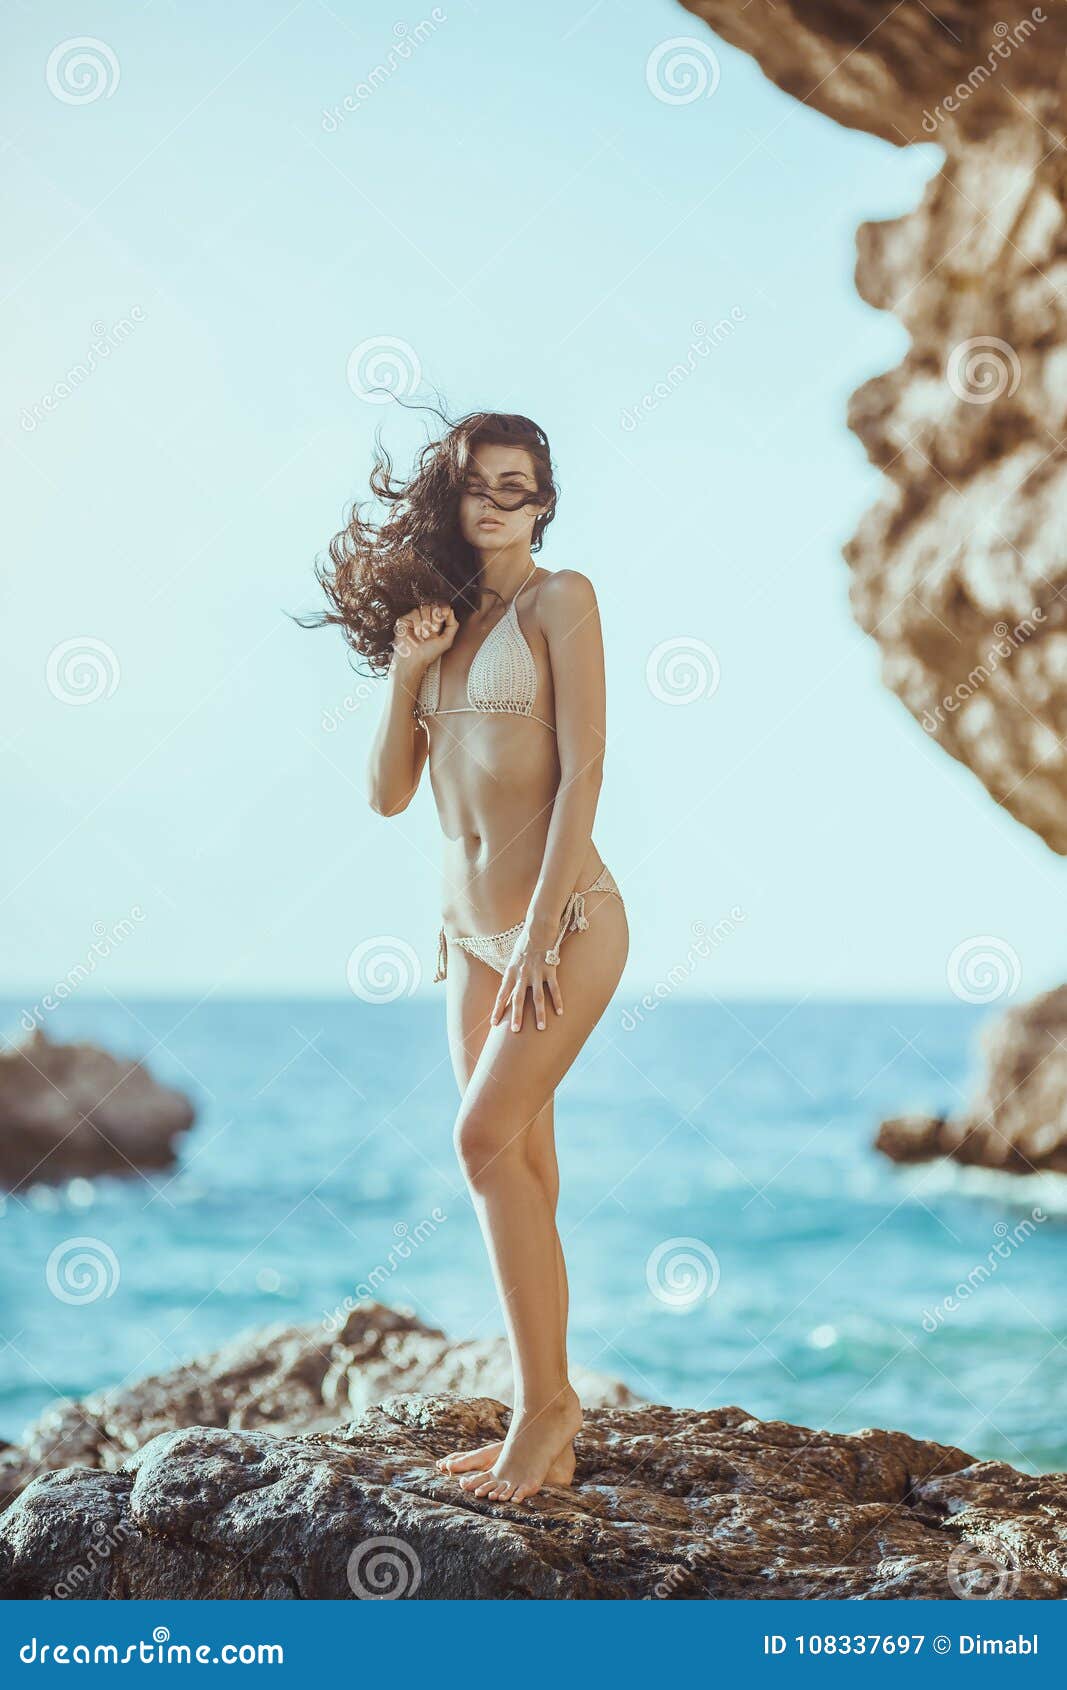 amateur female nude beach